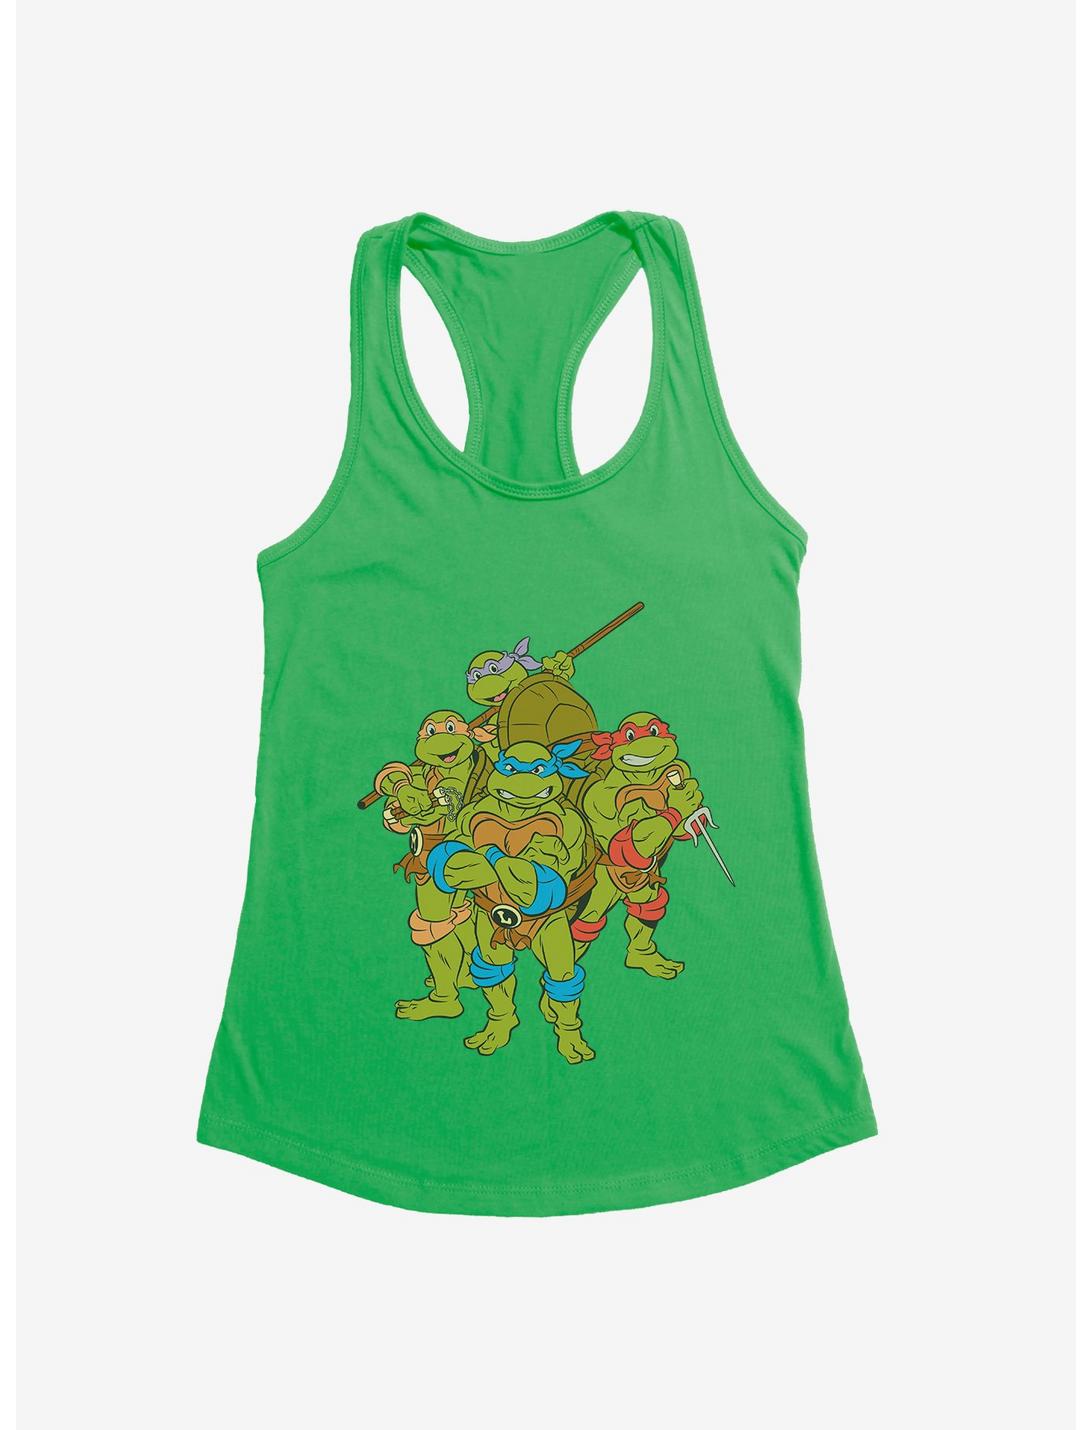 Teenage Mutant Ninja Turtles Group Pose Girls Tank, KELLY GREEN, hi-res